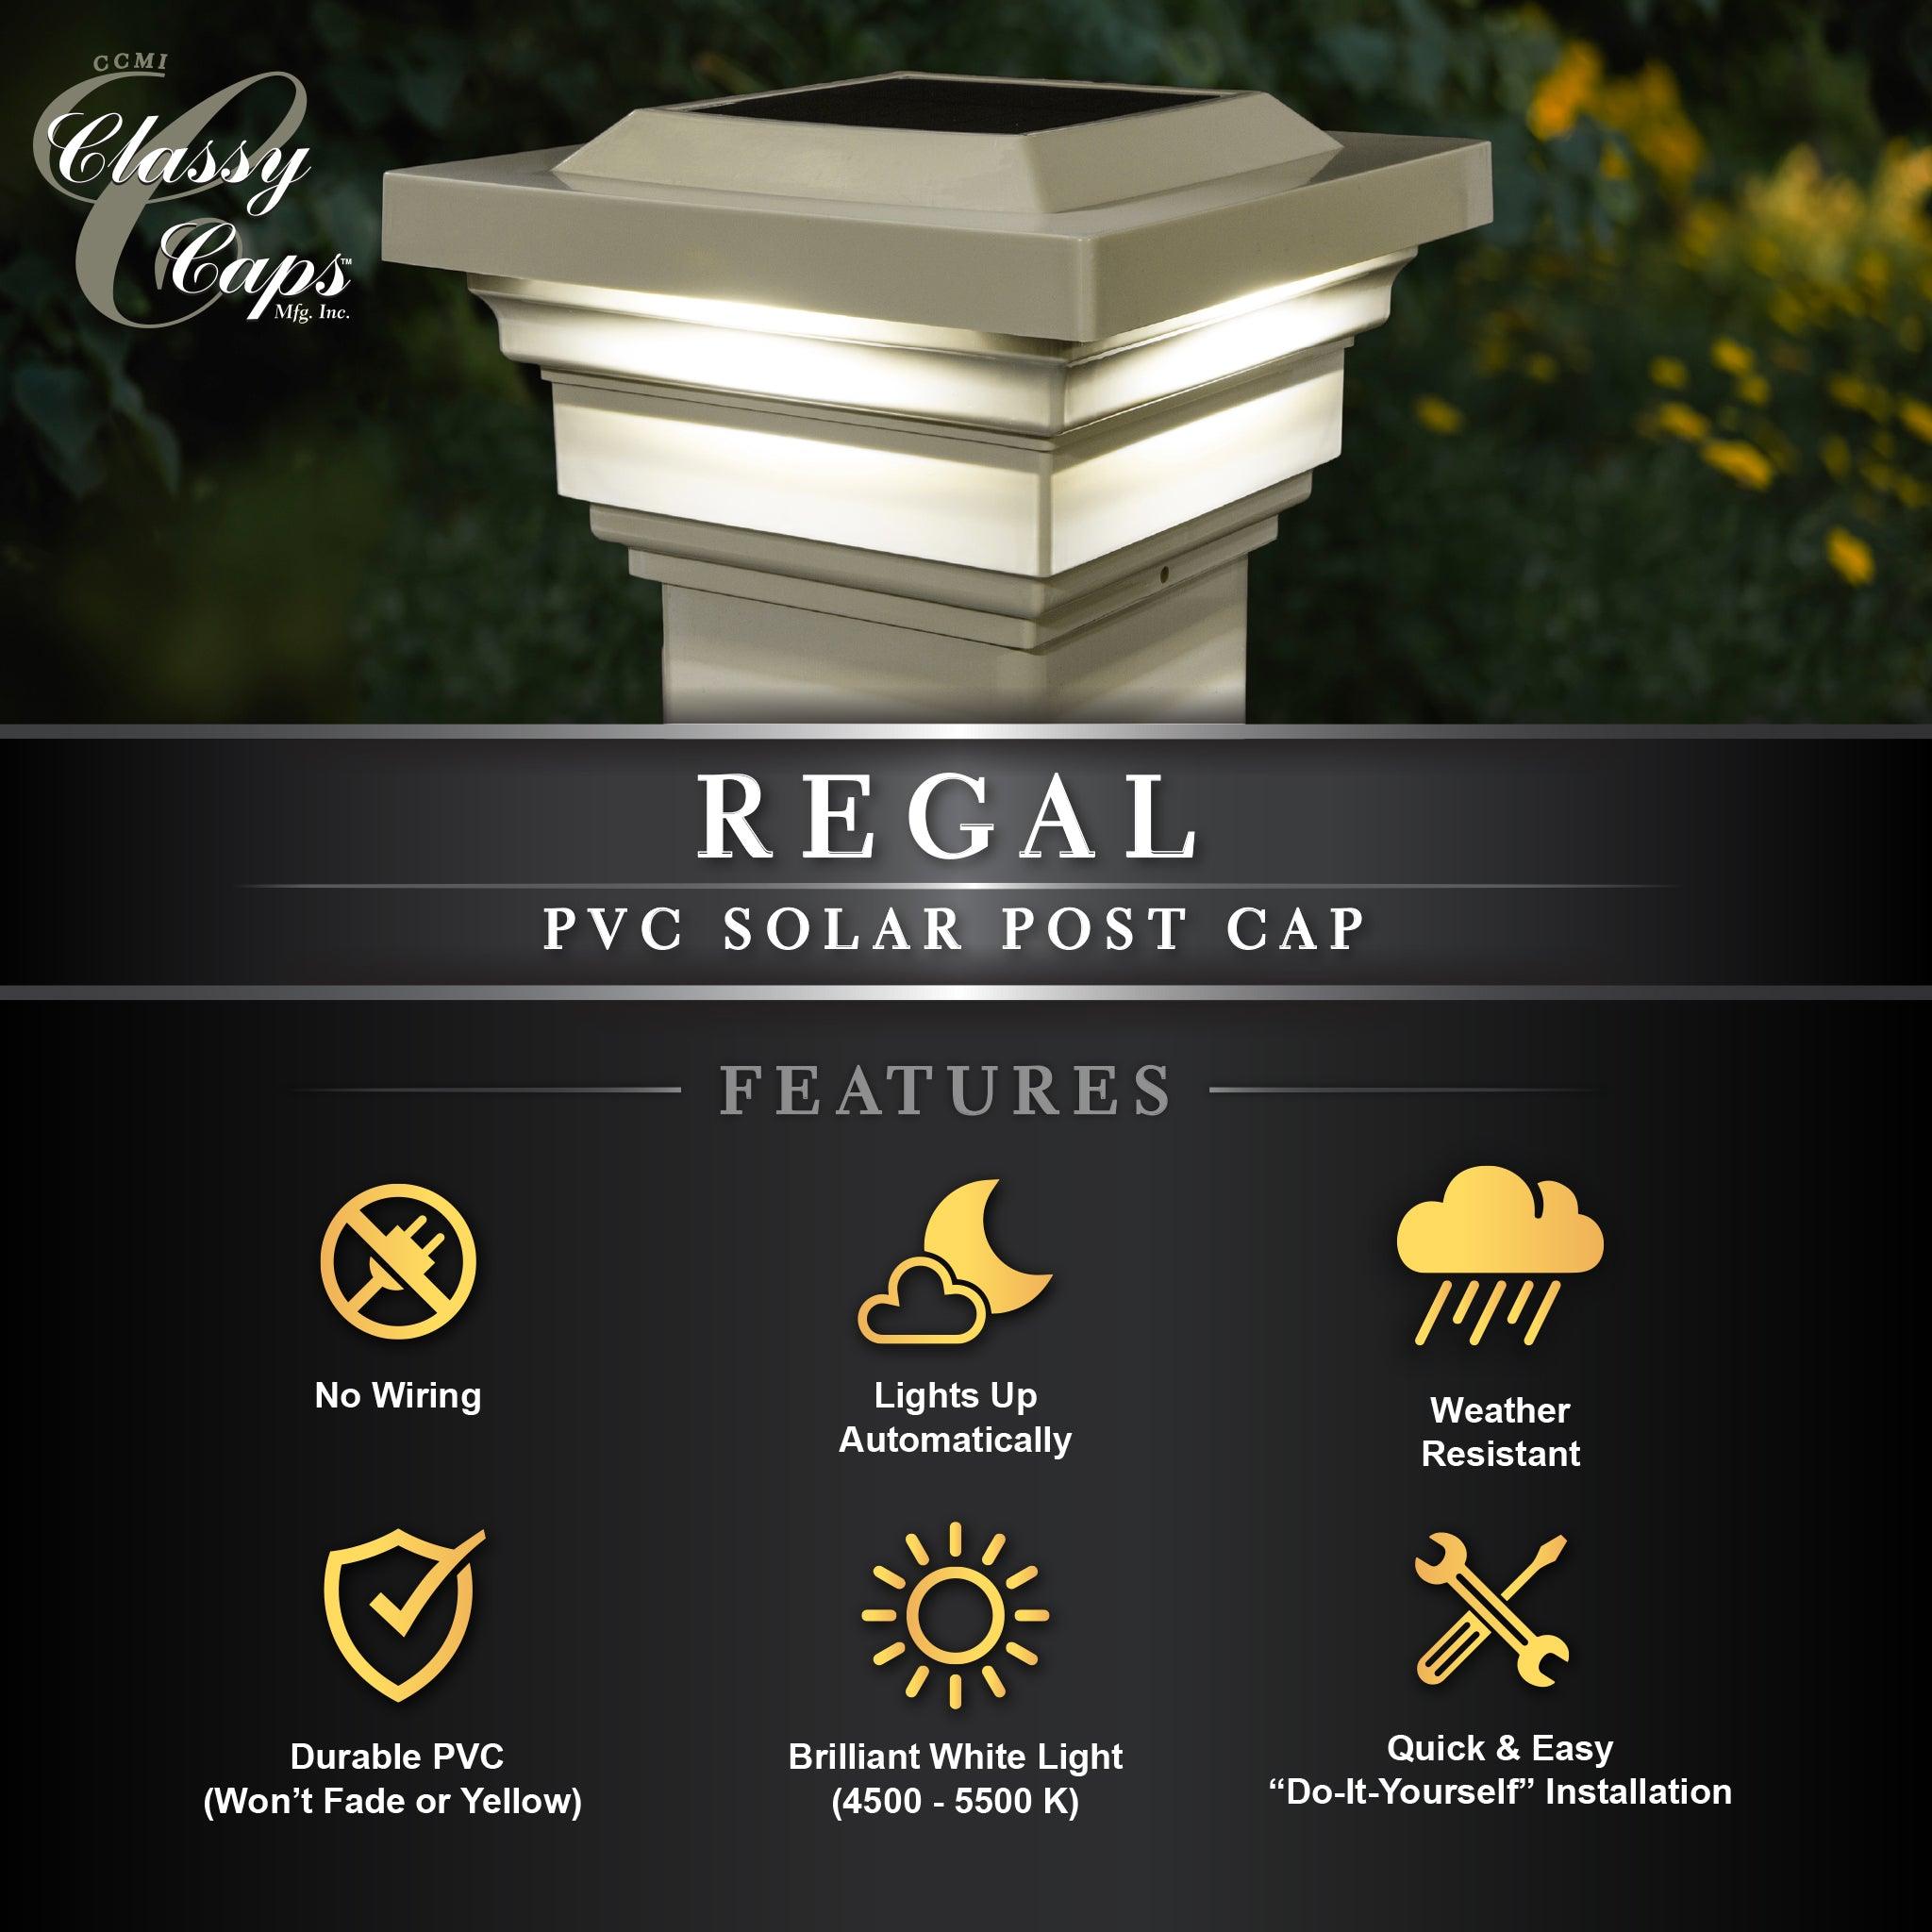 Regal Solar Post Cap - Tan With 3.5"x3.5" Adaptor - Classy Caps Mfg. Inc.